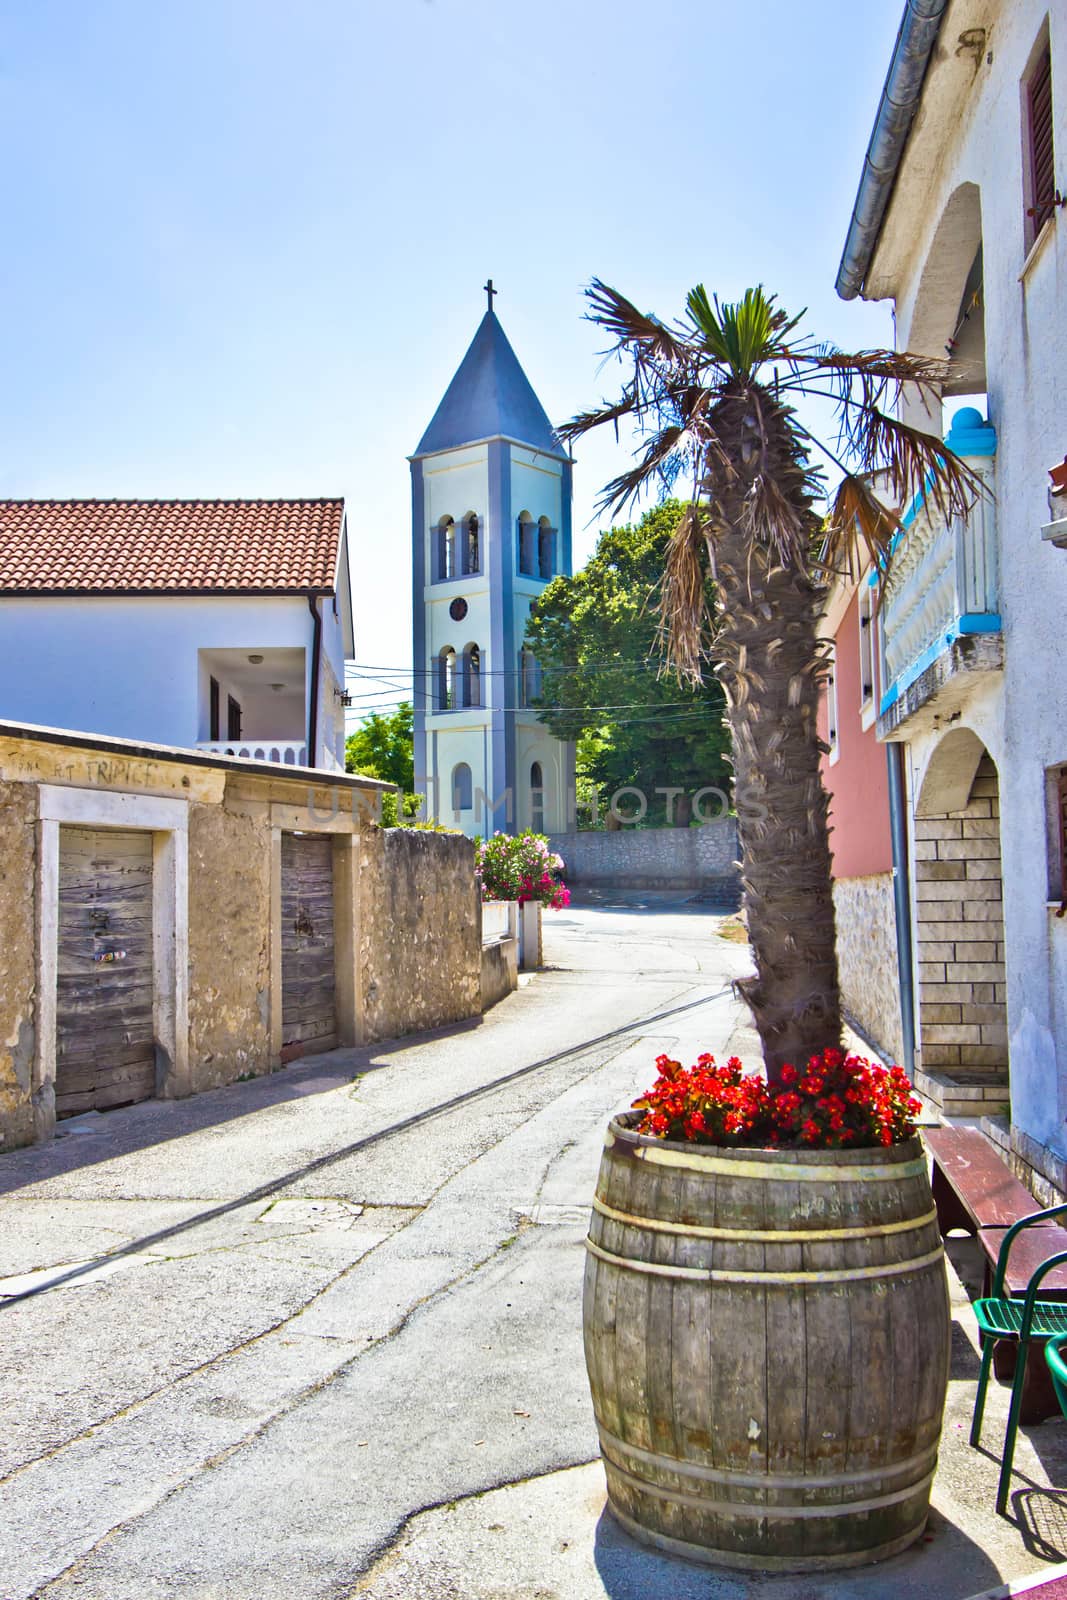 Dalmatian street in town of Petrcane, Croatia